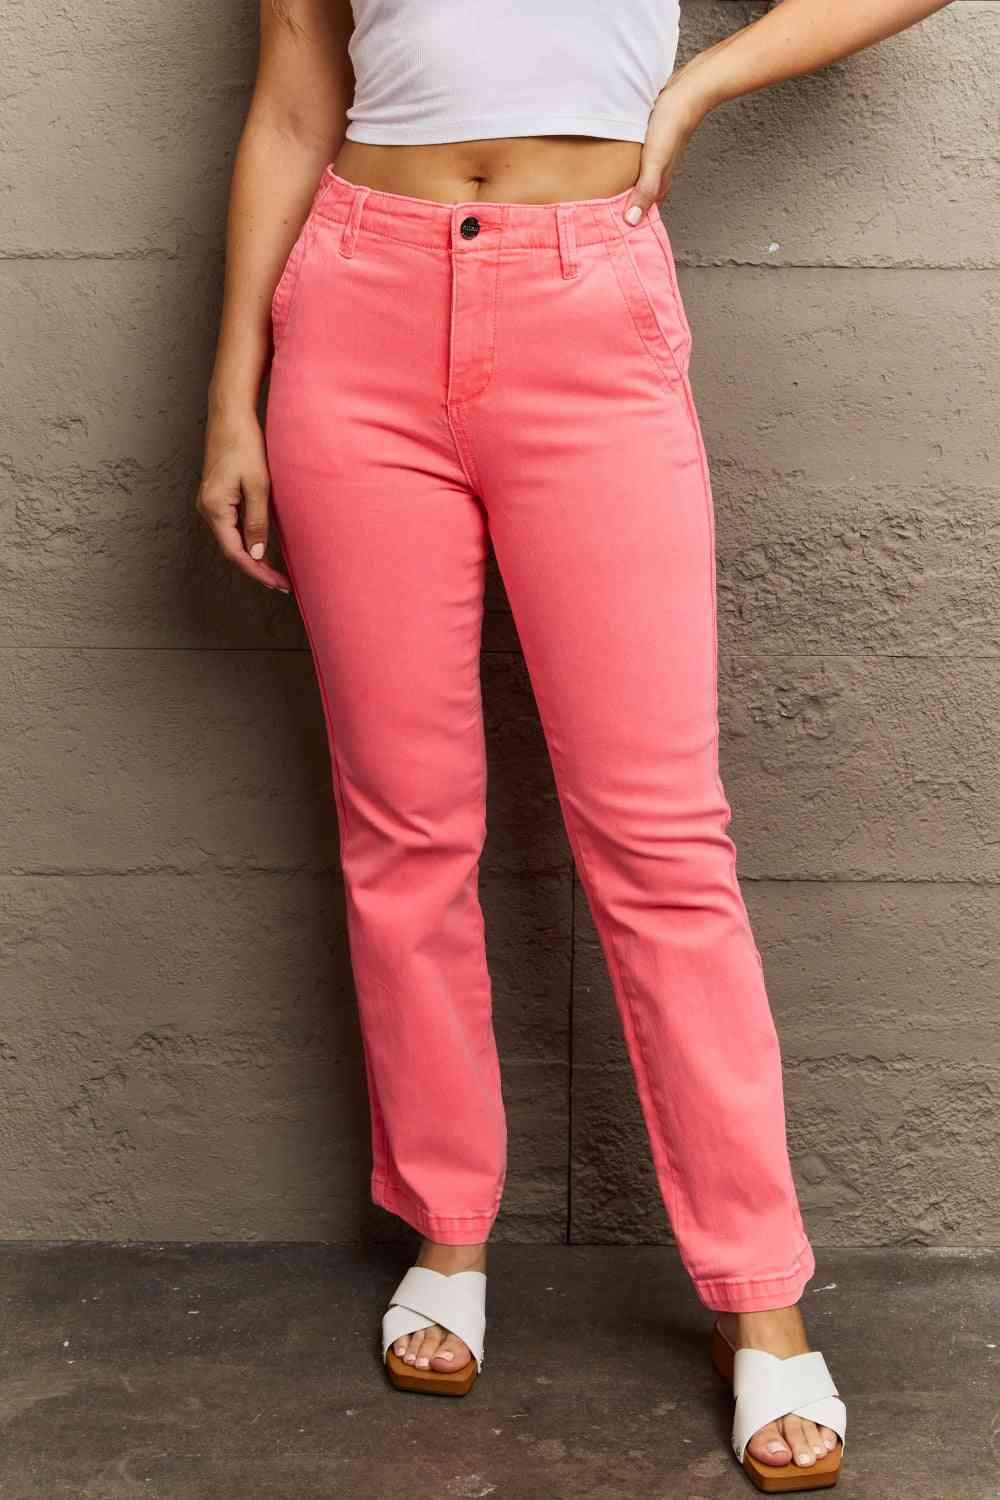 Bona Fide Fashion - Full Size High Waist Side Twill Straight Jeans - Women Fashion - Bona Fide Fashion